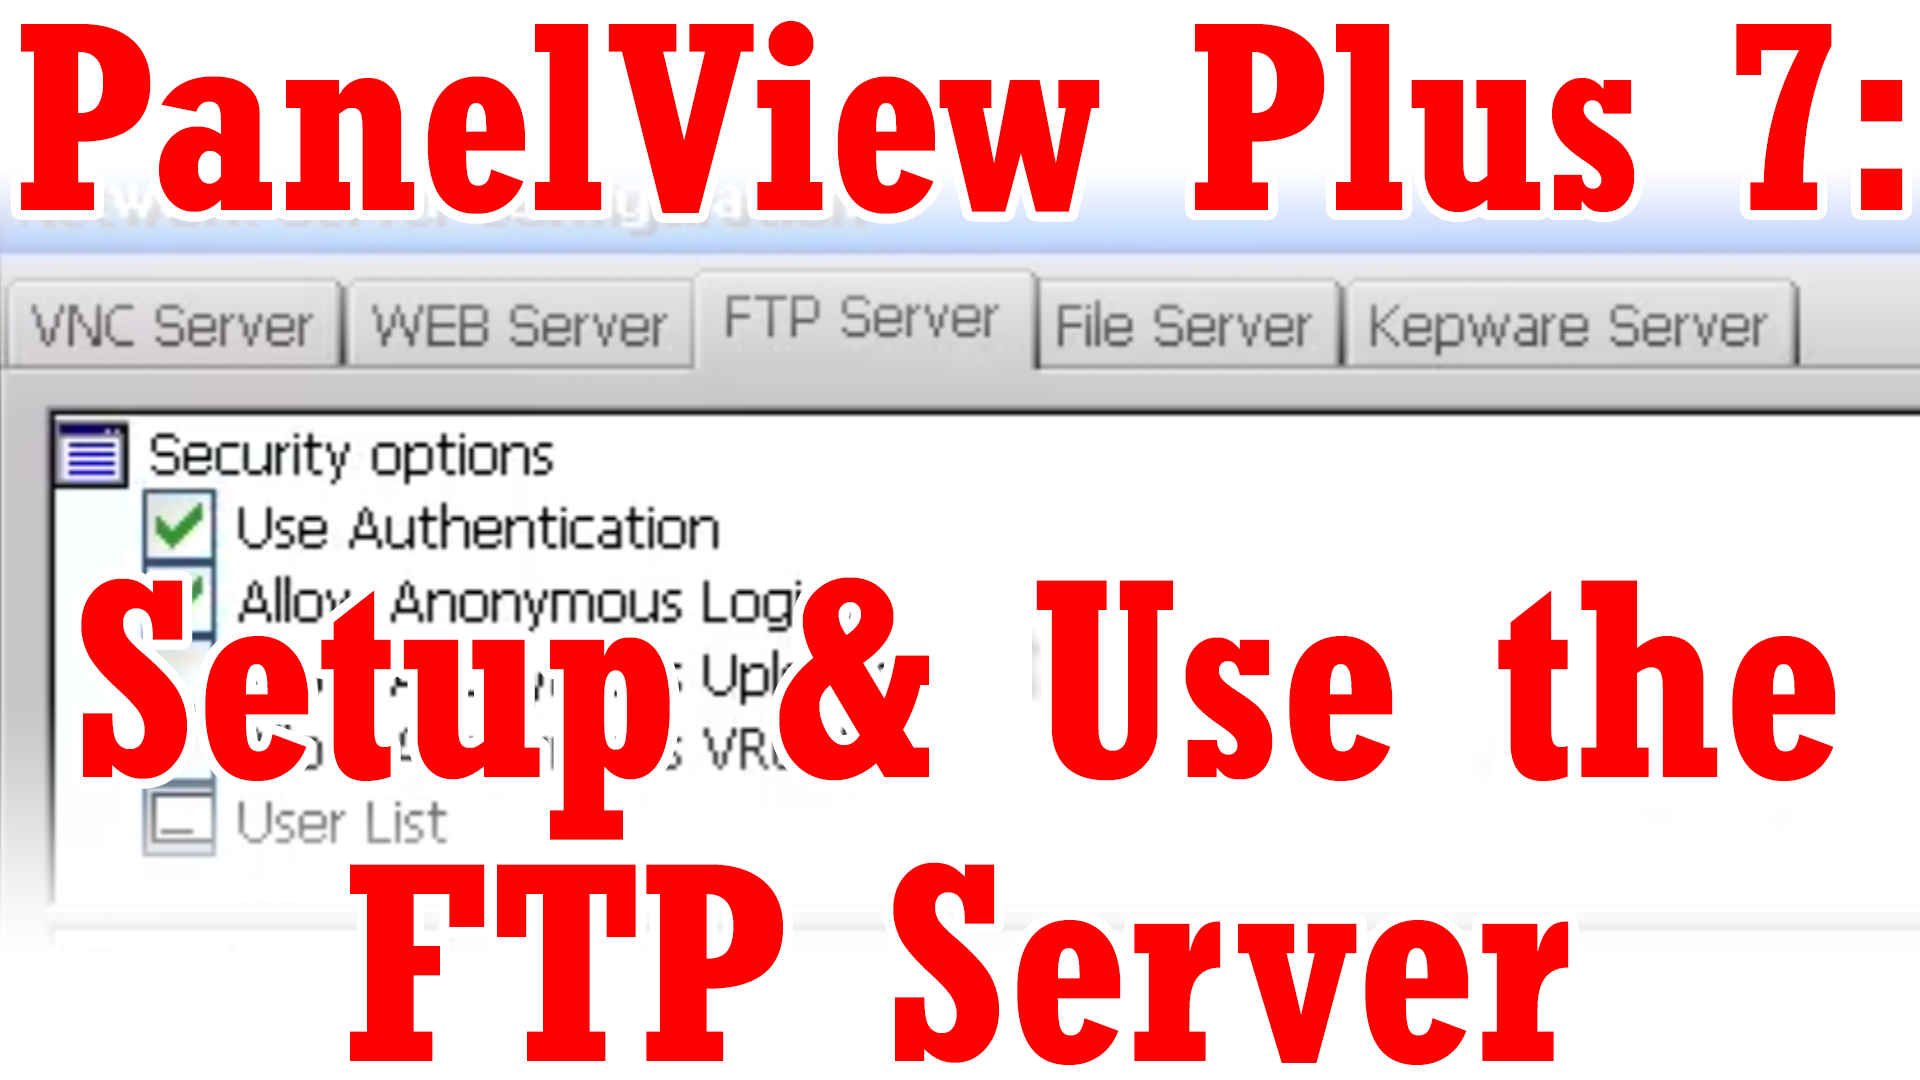 PanelView Plus 7 - Setup and Use FTP Server (M3E37)